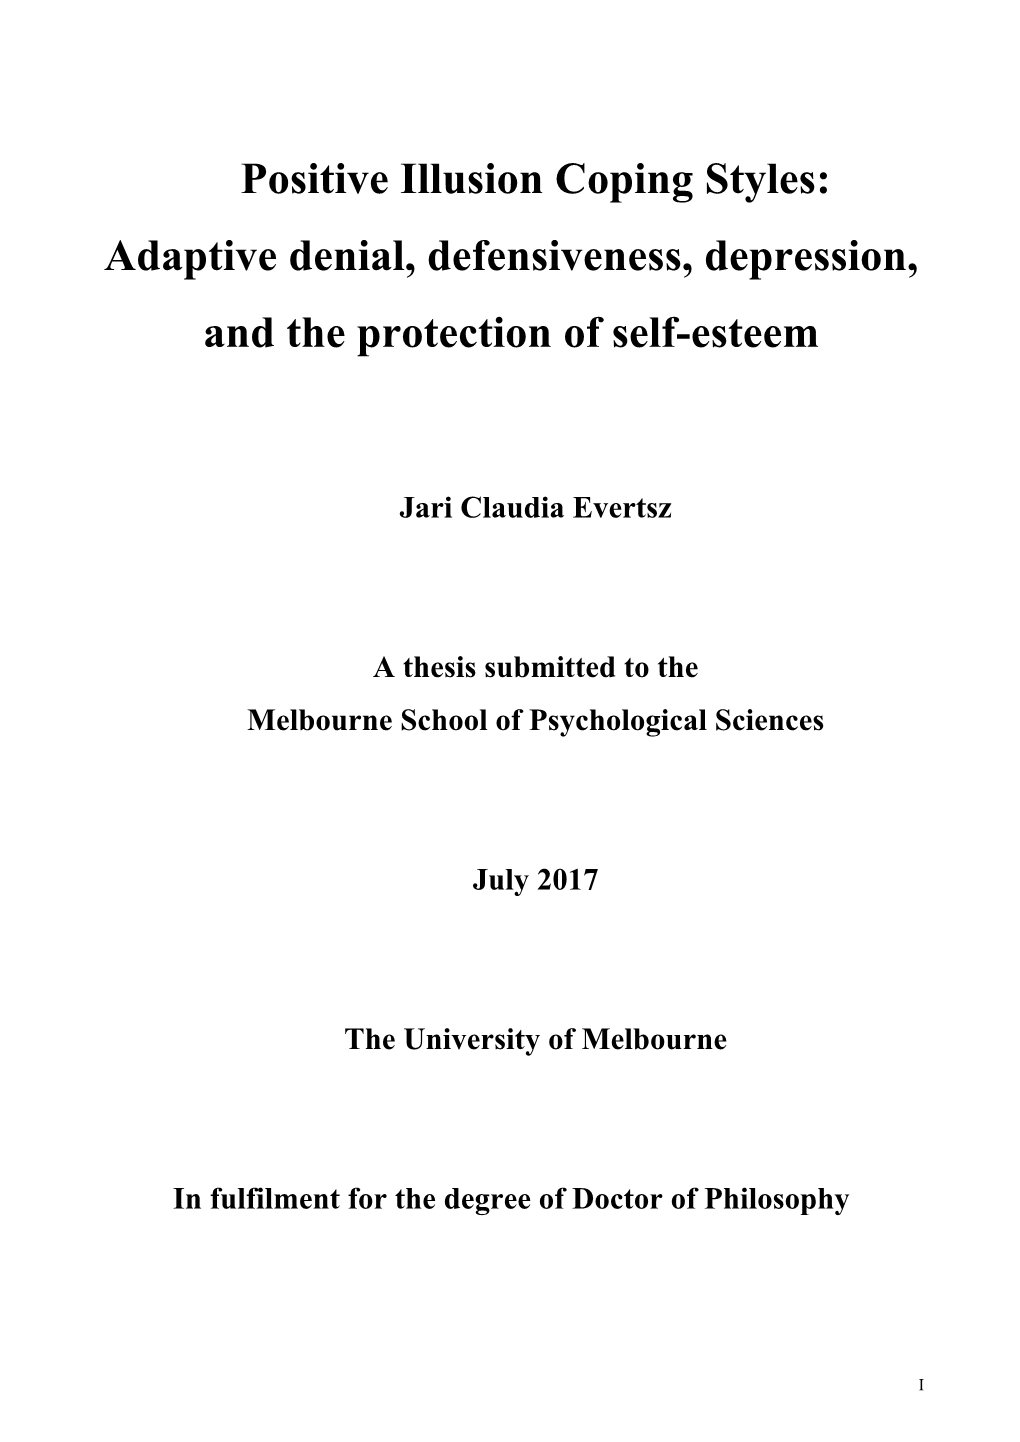 Positive Illusion Coping Styles: Adaptive Denial, Defensiveness, Depression